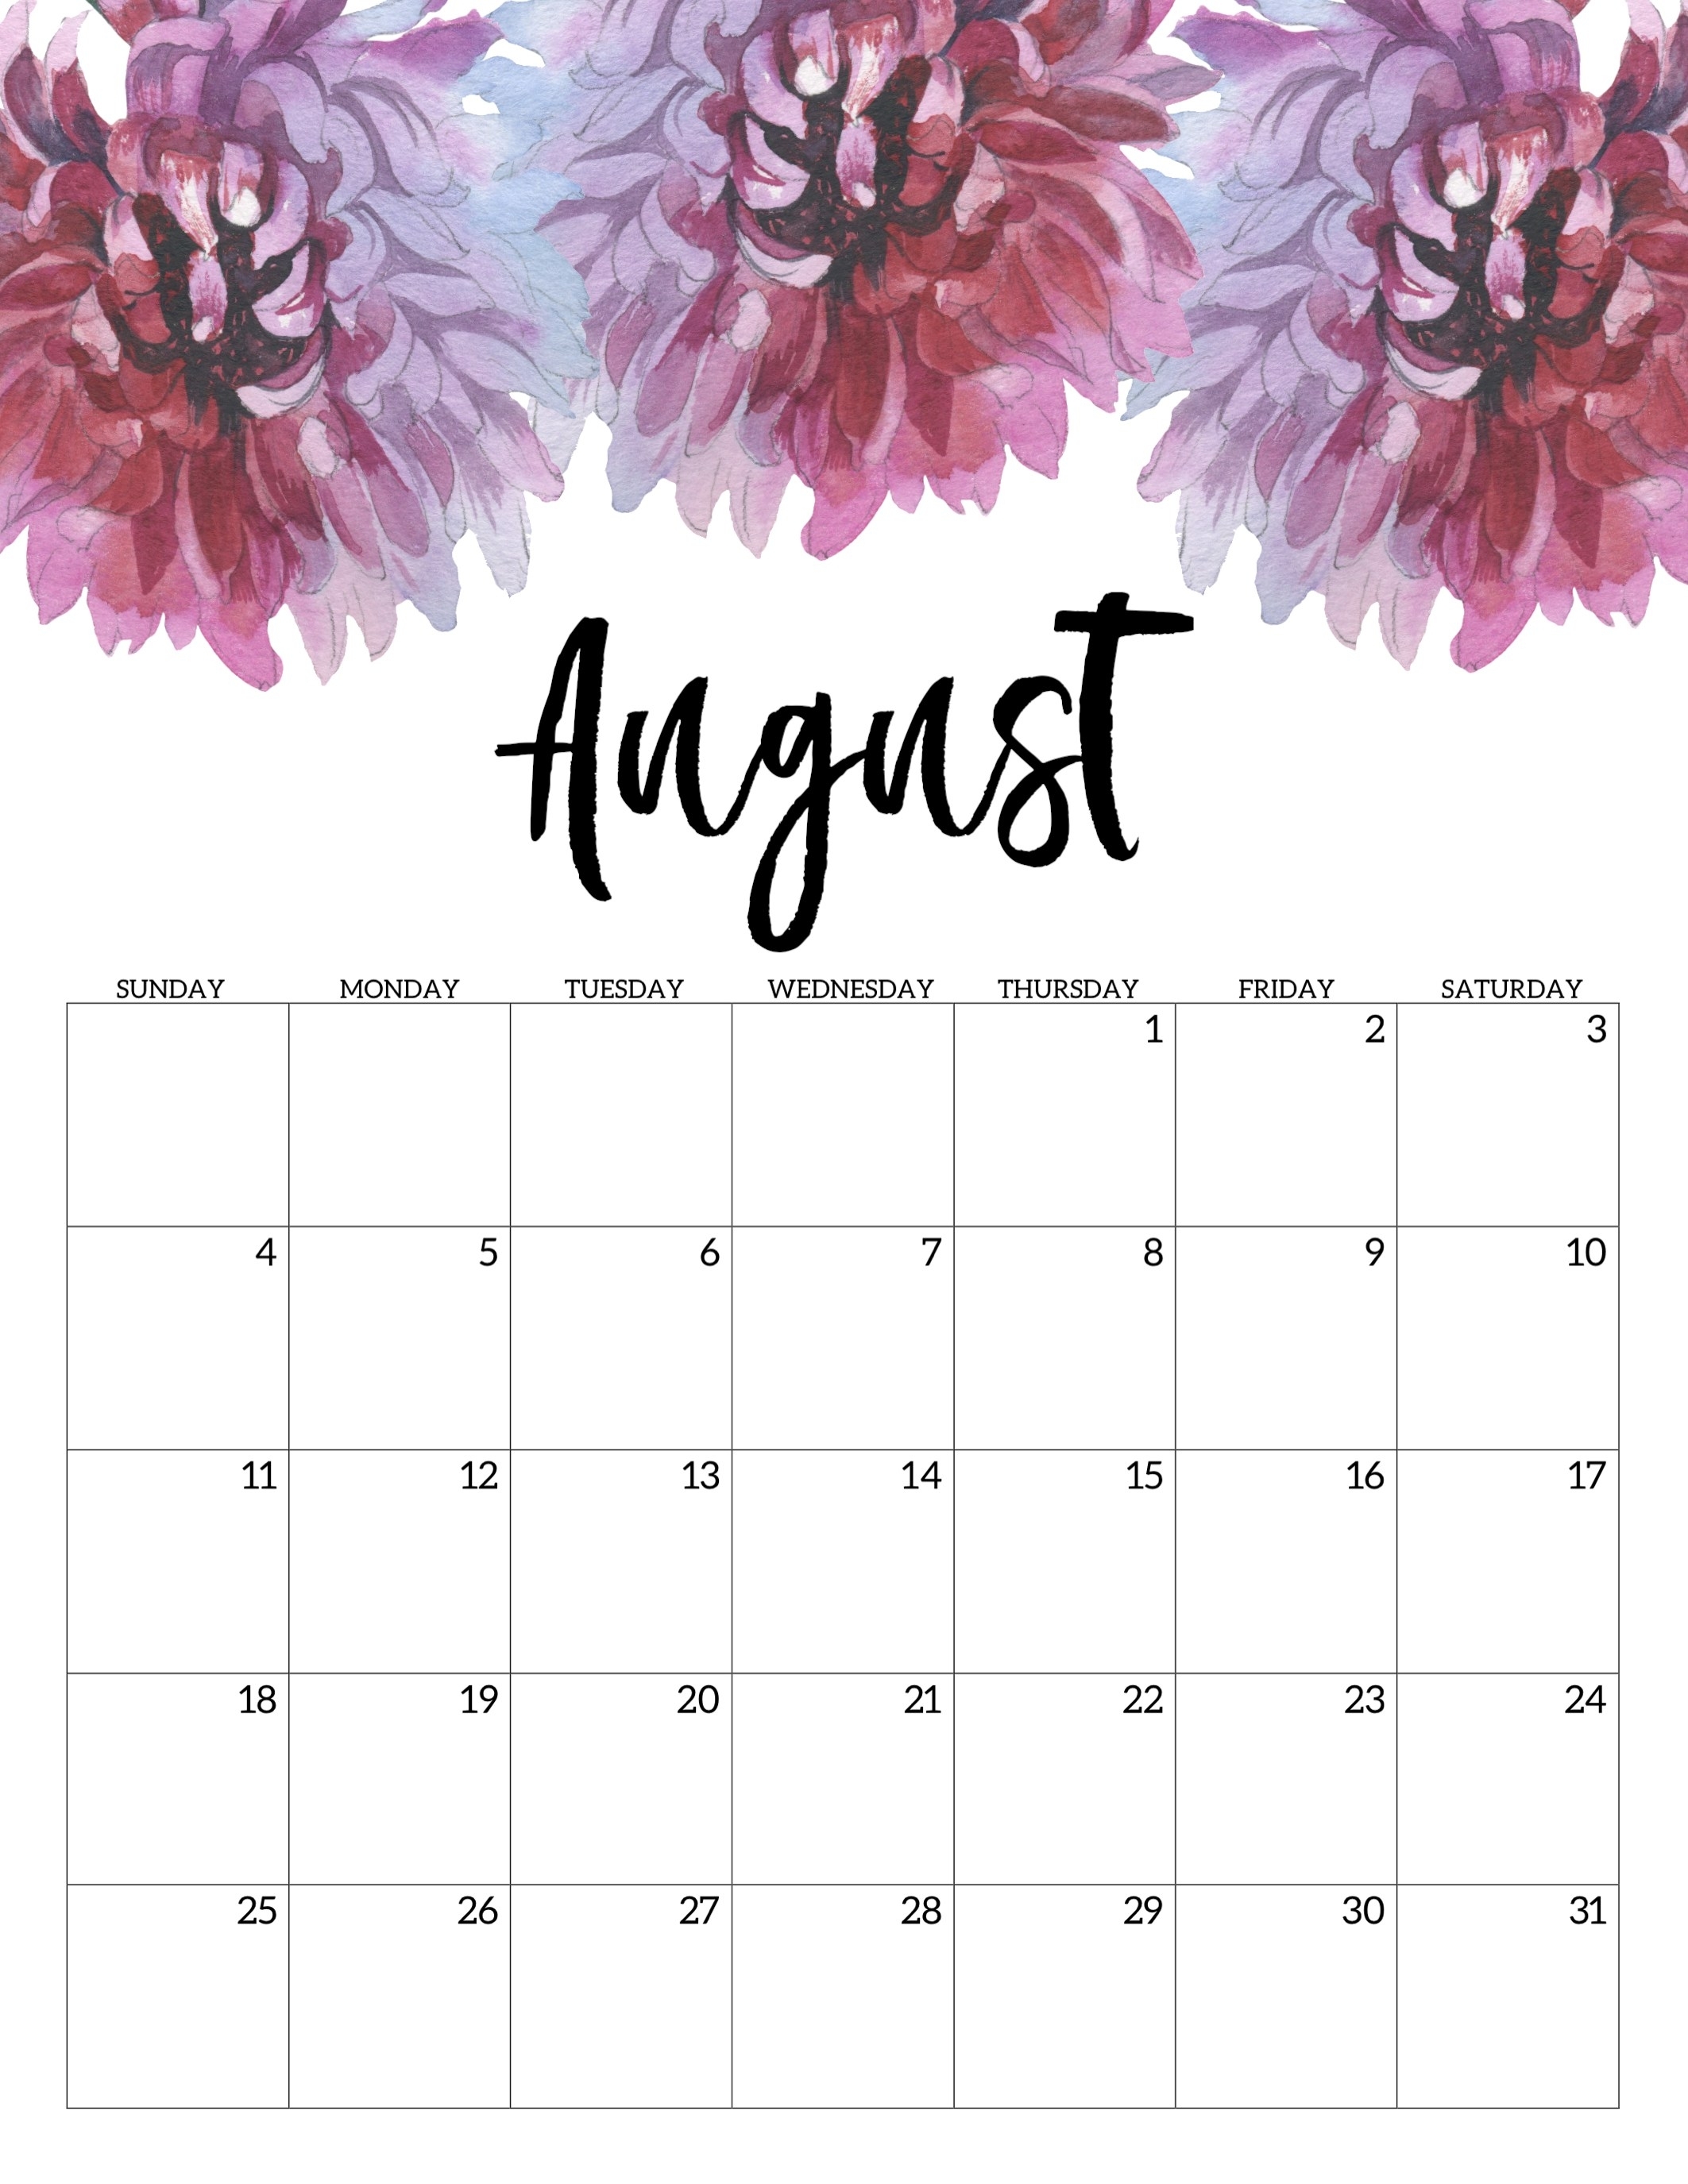 Free Printable Calendar 2019 - Floral - Paper Trail Design inside Monthly Calendar Watercolor Floral Printable